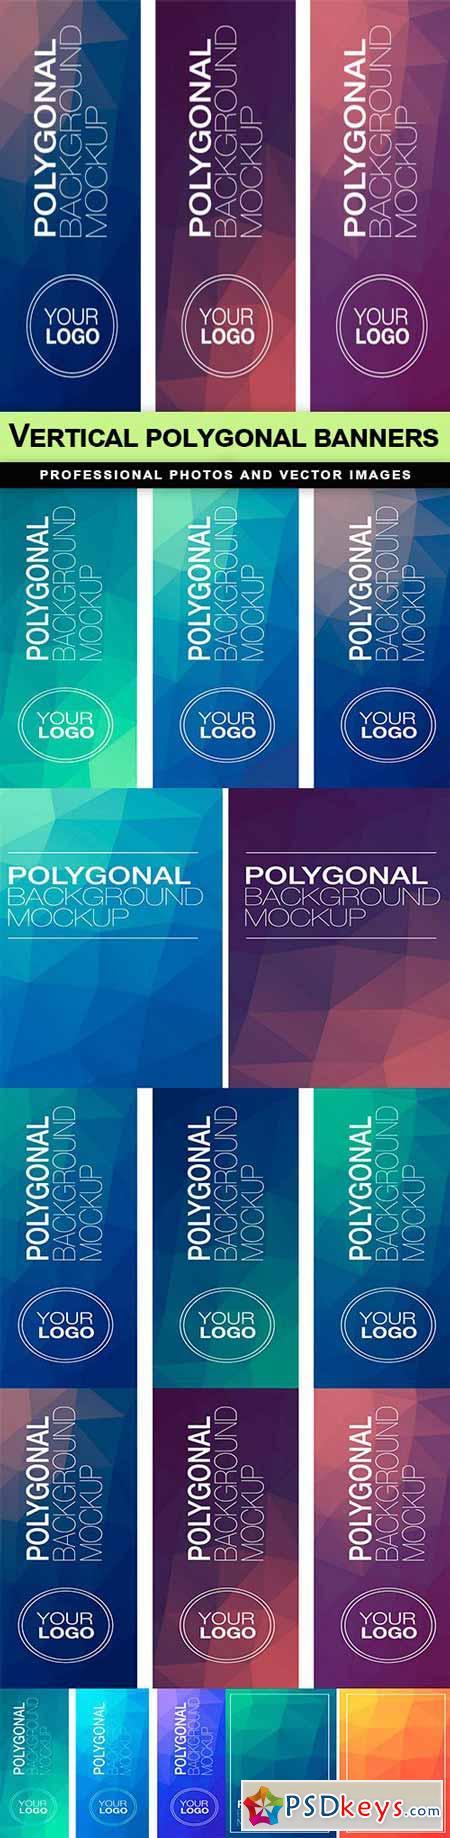 Vertical polygonal banners - 6 EPS